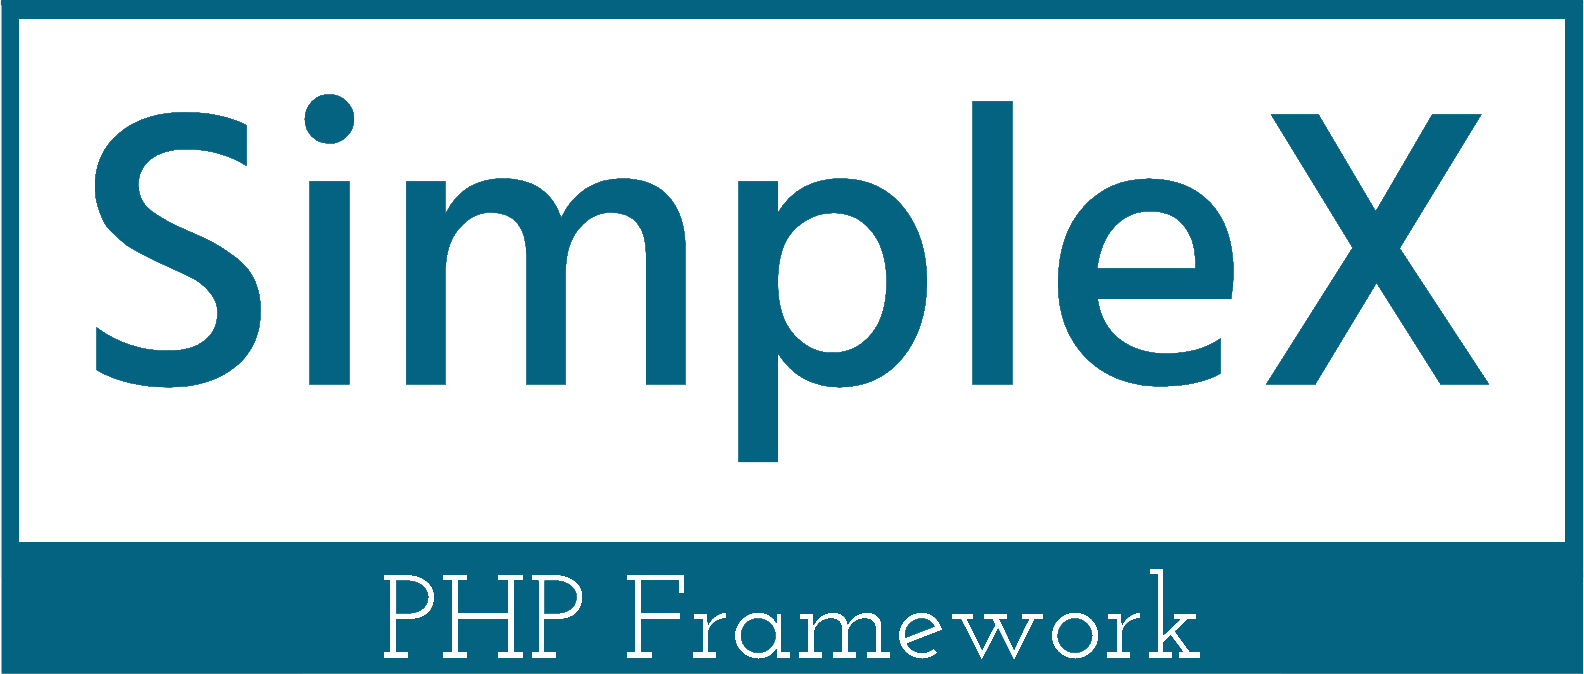 SimpleX Framework